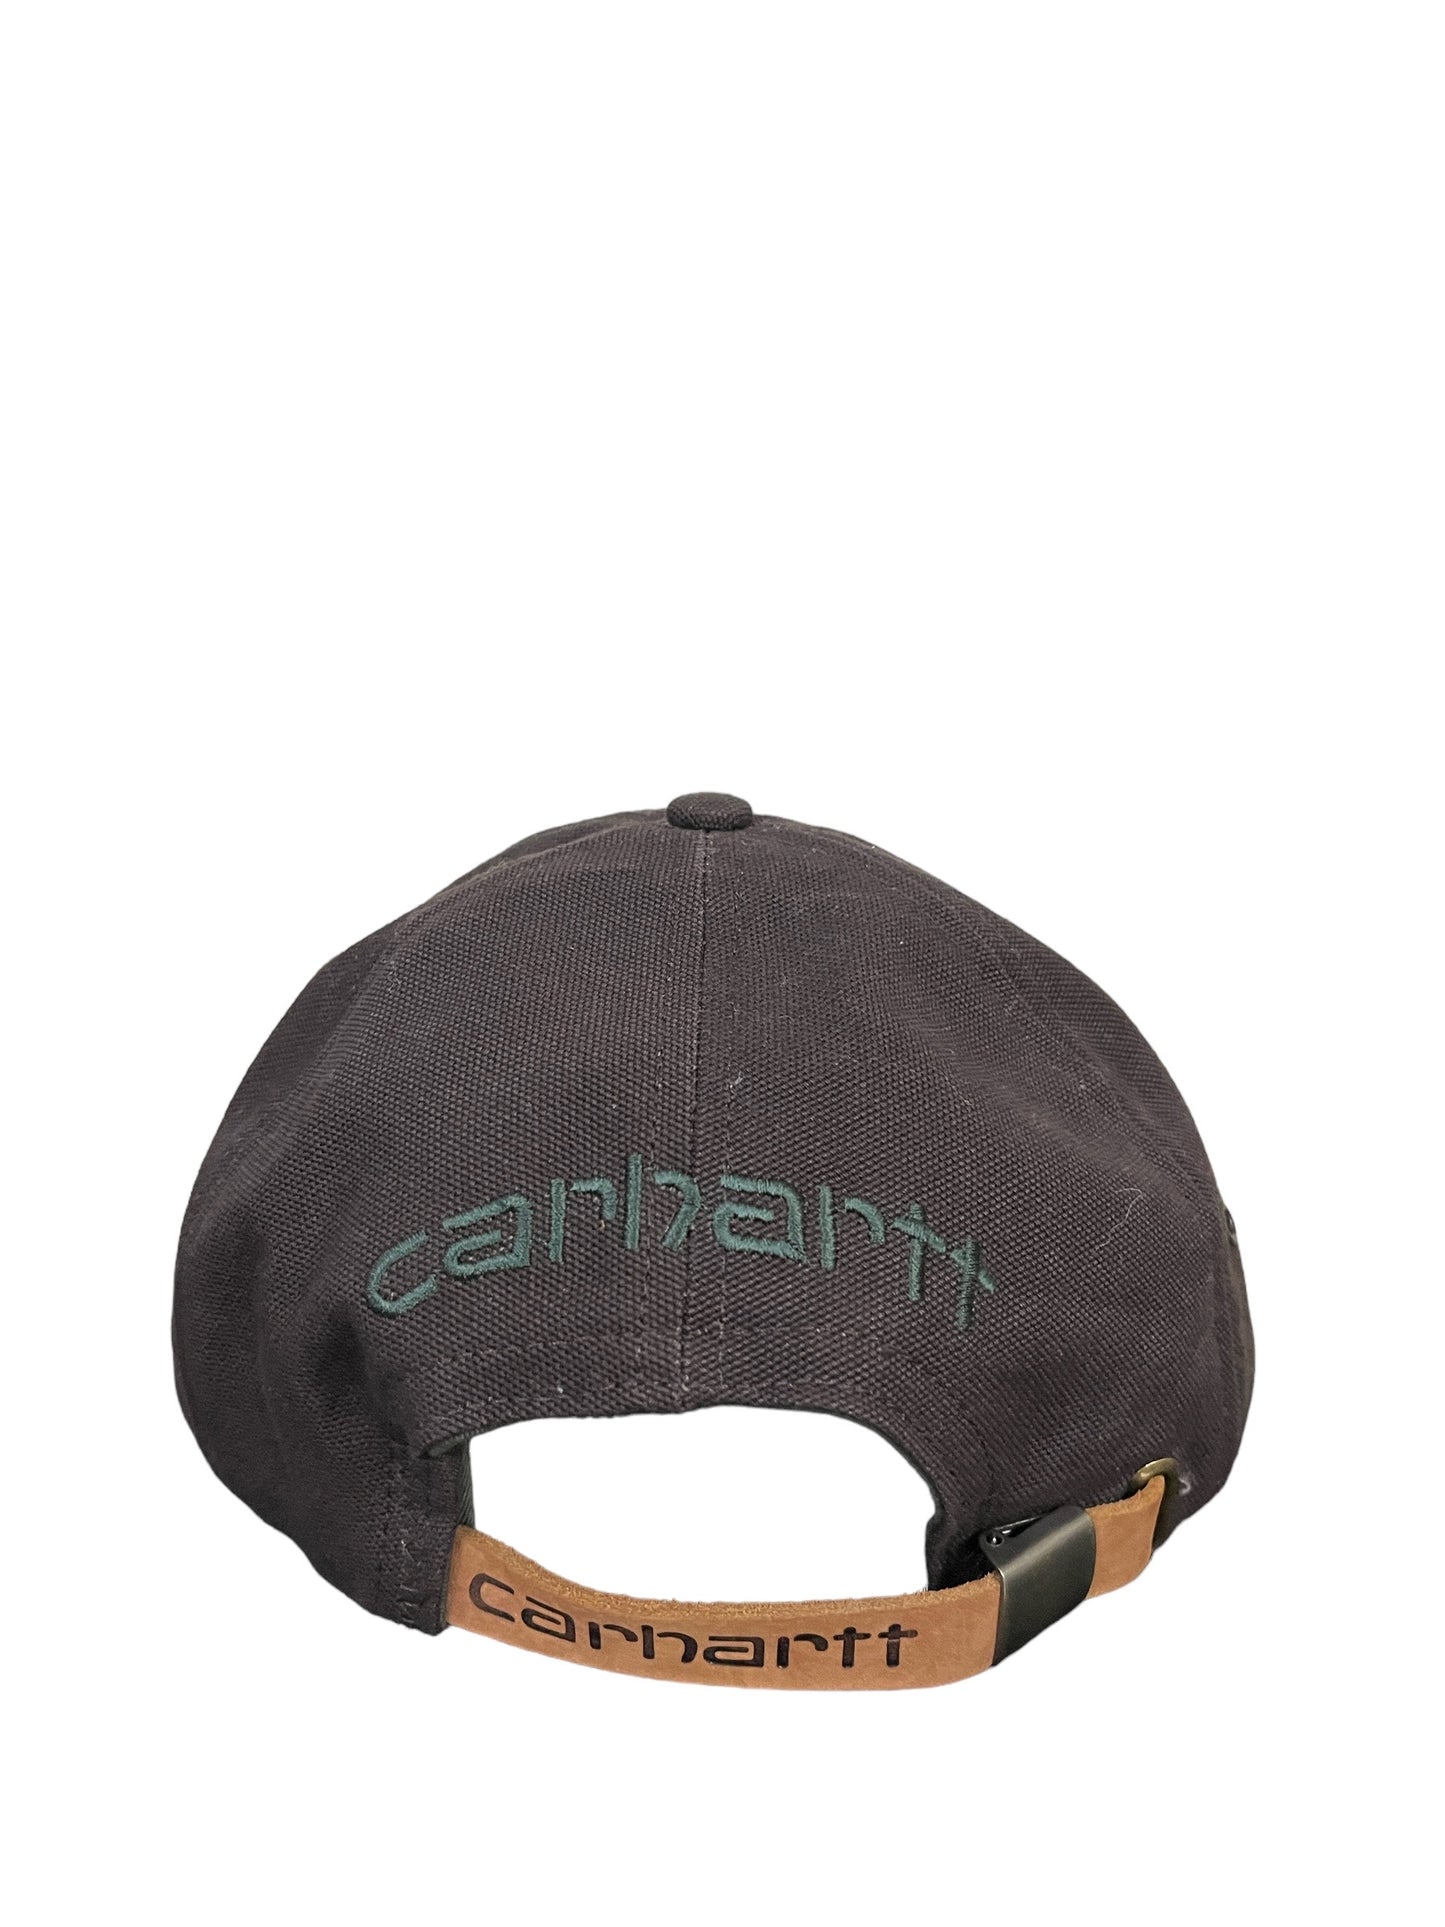 Carhartt  Brown Canvas Hat